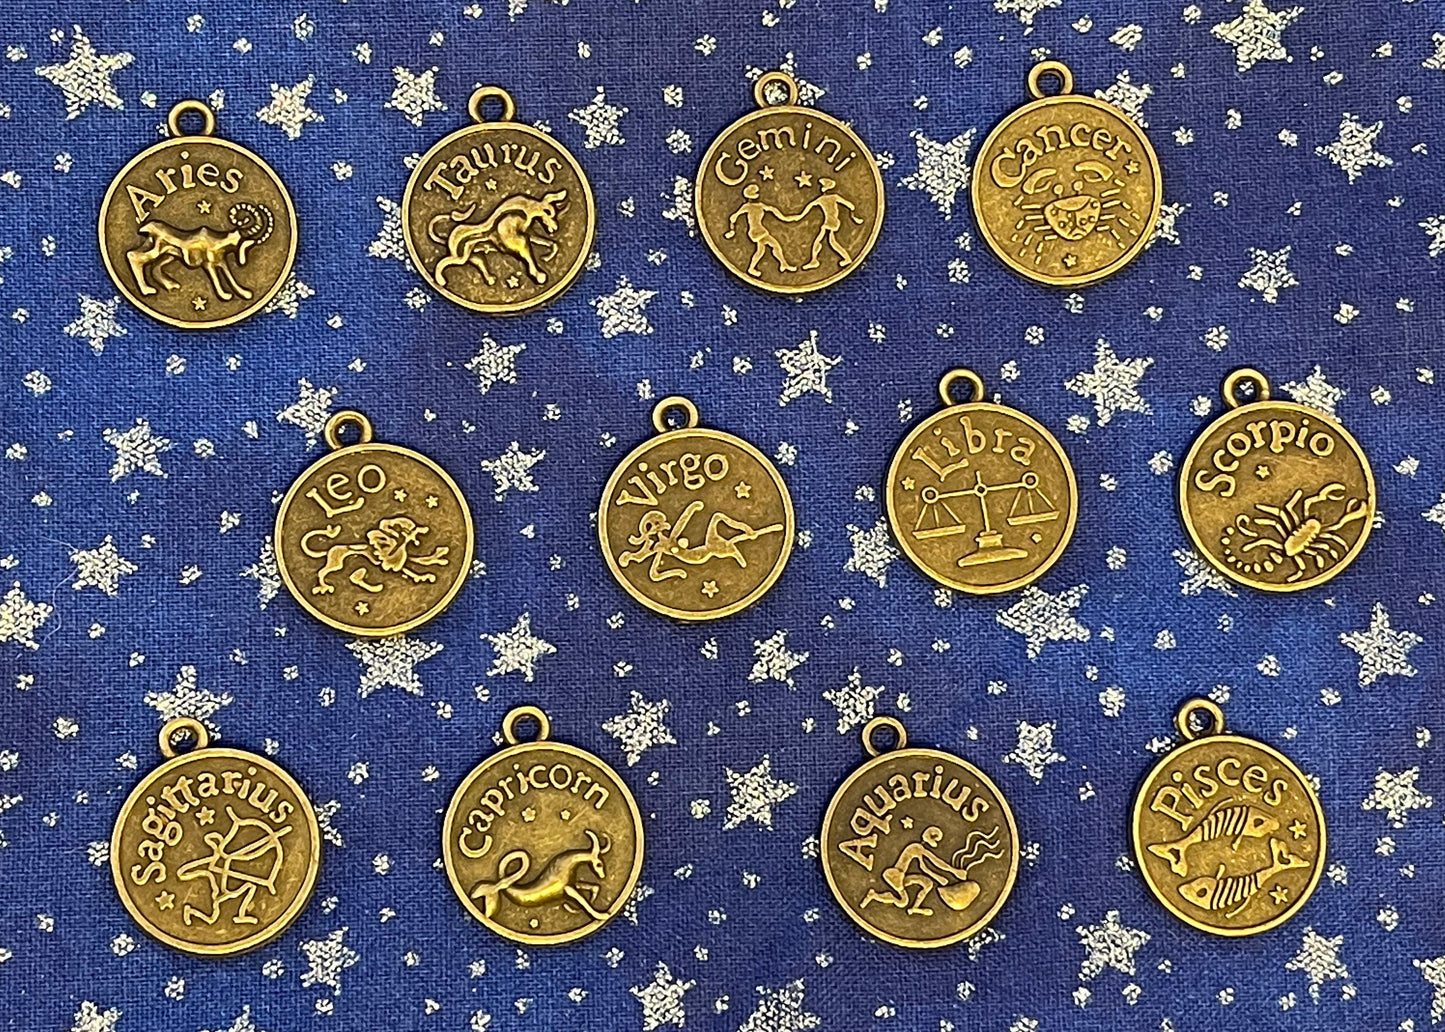 Greek Zodiac charm,Astrology,Birthday-silver,bronze;Aries Taurus Gemini Cancer Leo Virgo Libra Scorpio Sagittarius Capricorn Aquarius Pisces